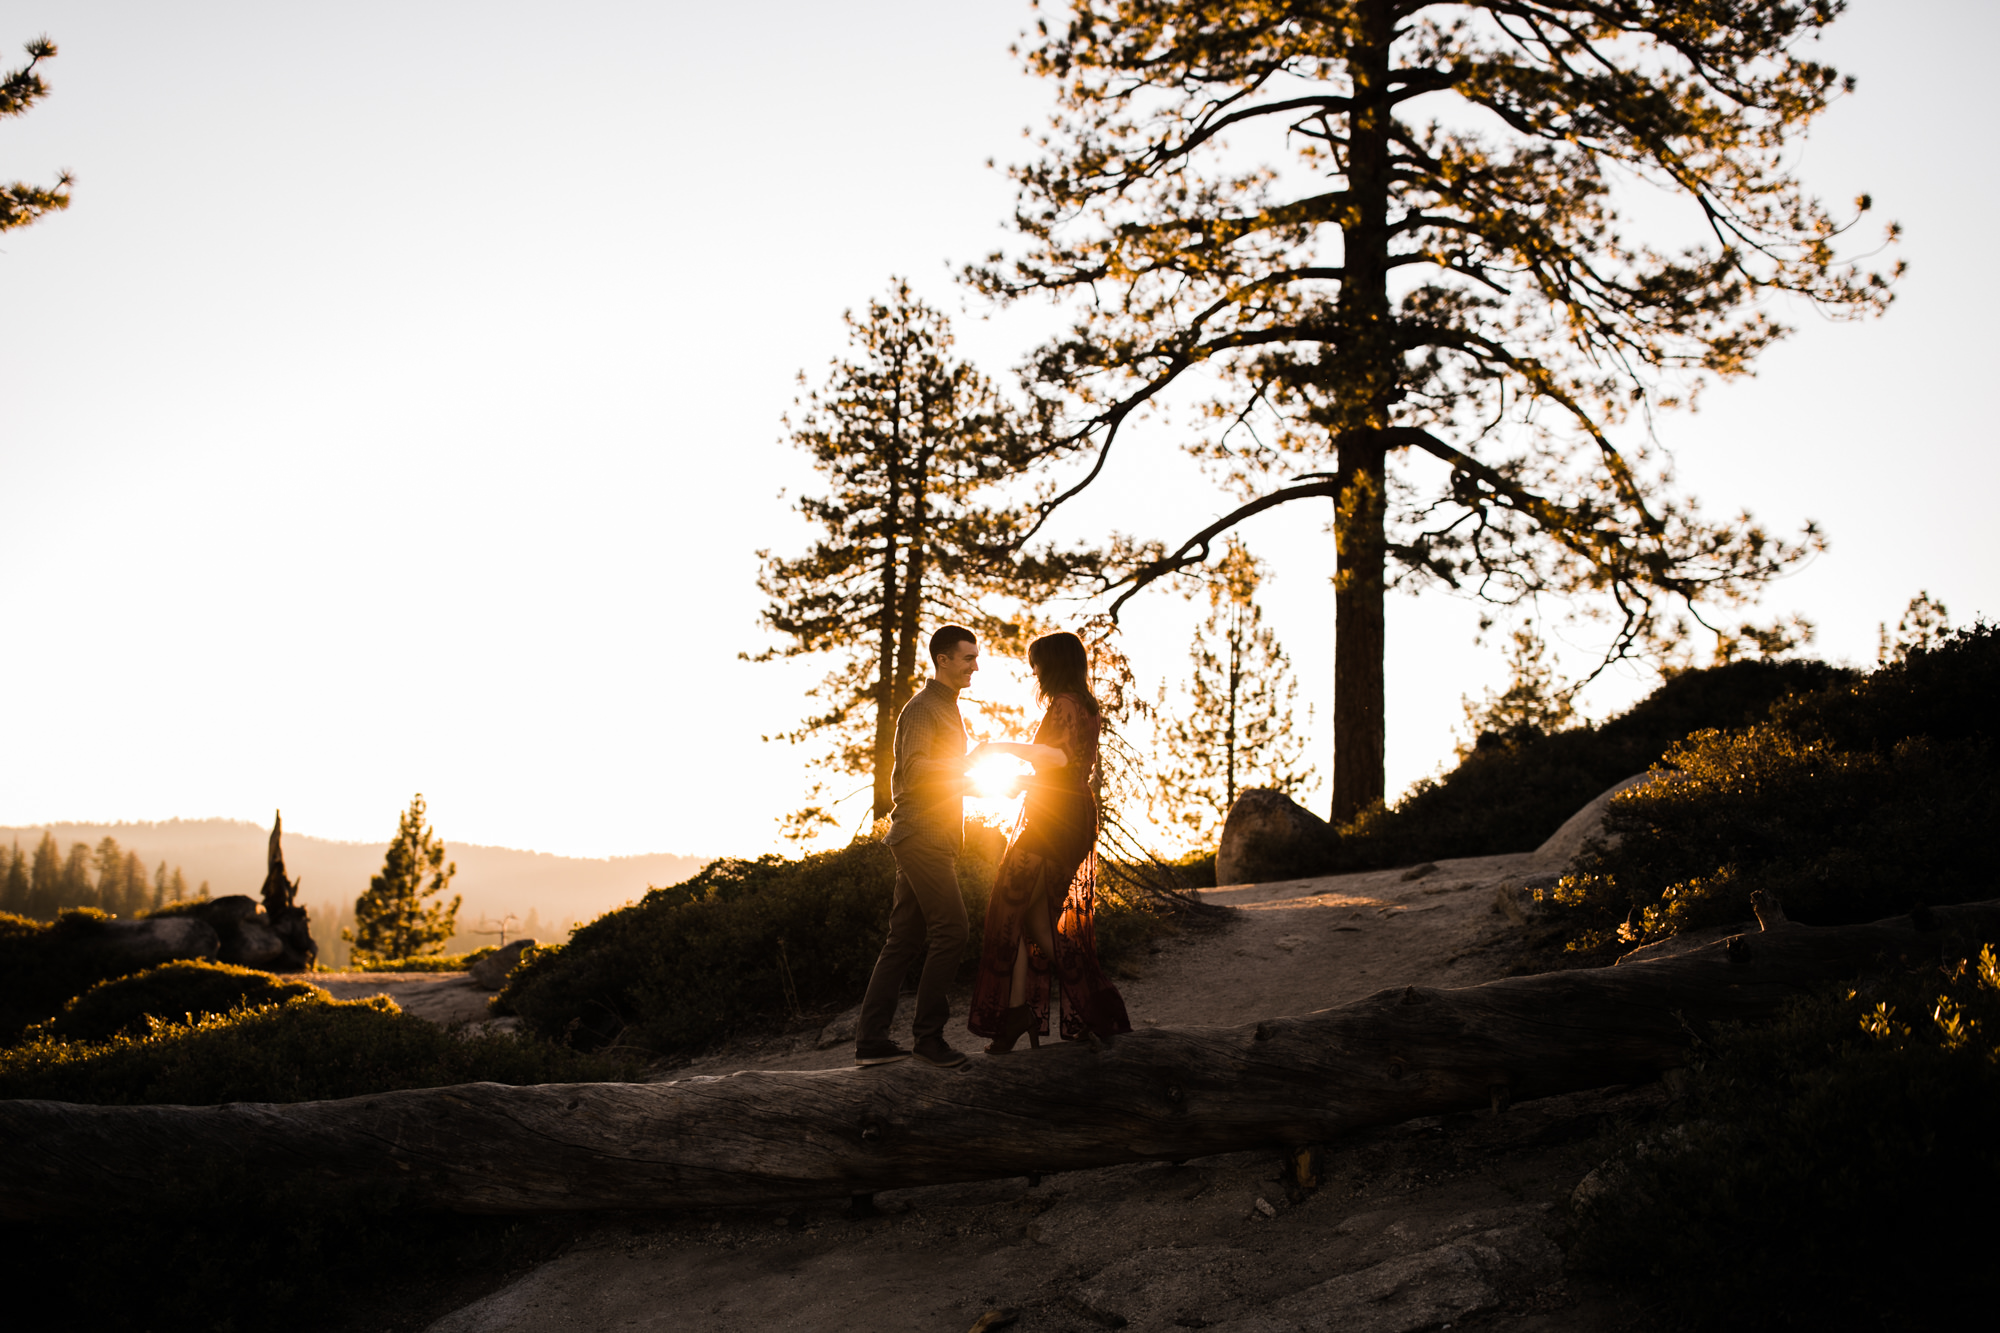 rachel + seth's adventurous taft point engagement session | yosemite national park | california adventure elopement photographer | the hearnes adventure photography | www.thehearnes.com